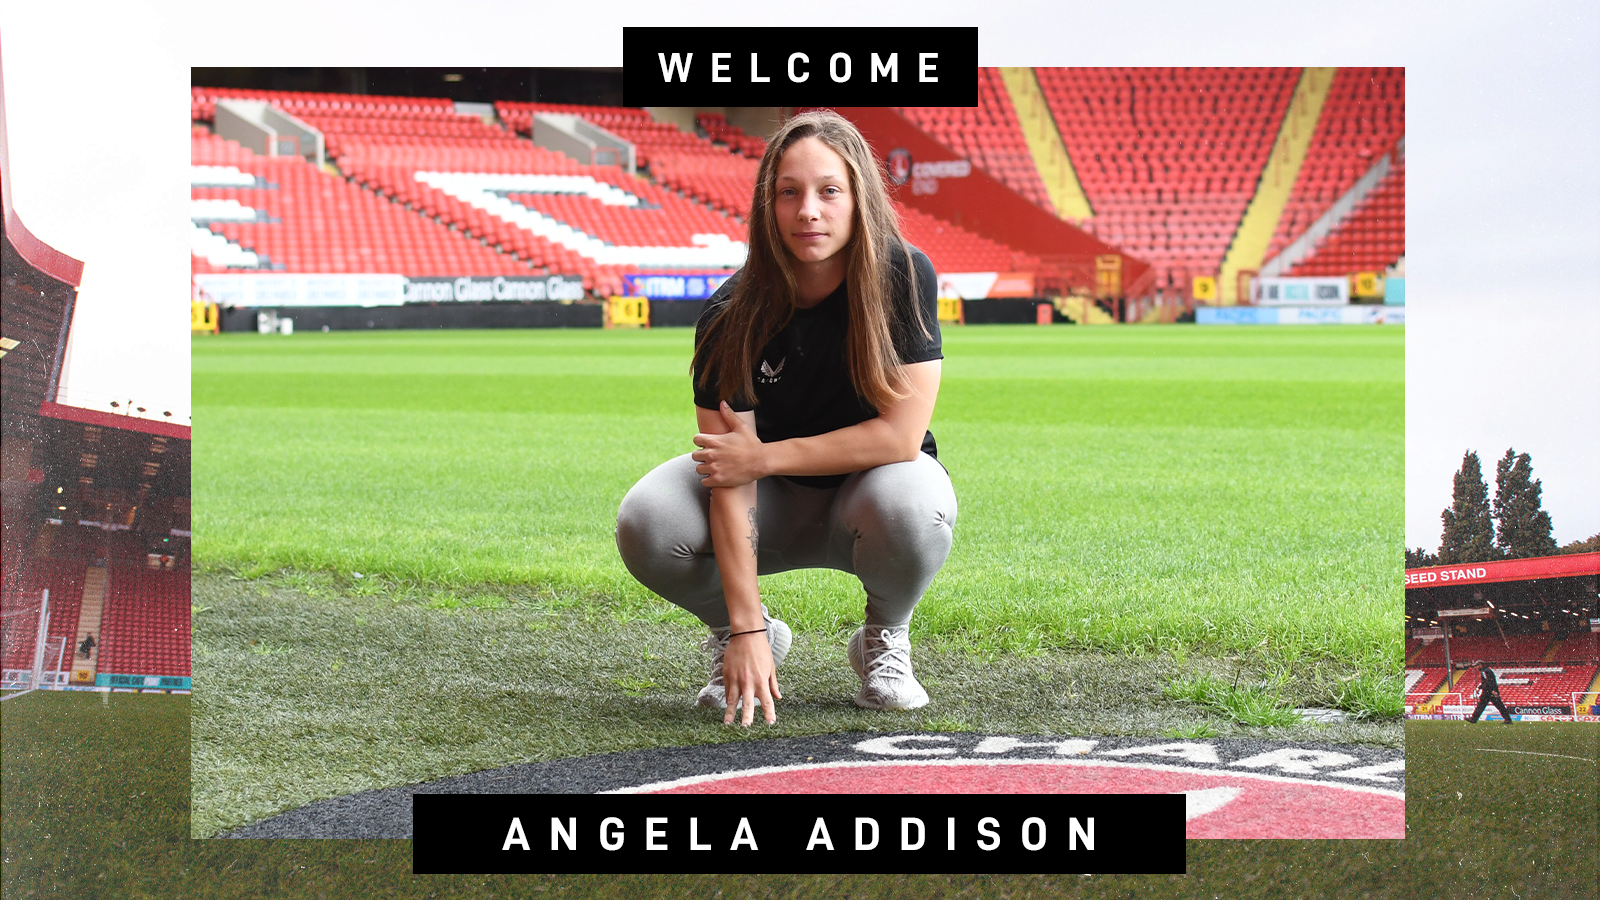 Welcome to Charlton, Angela Addison